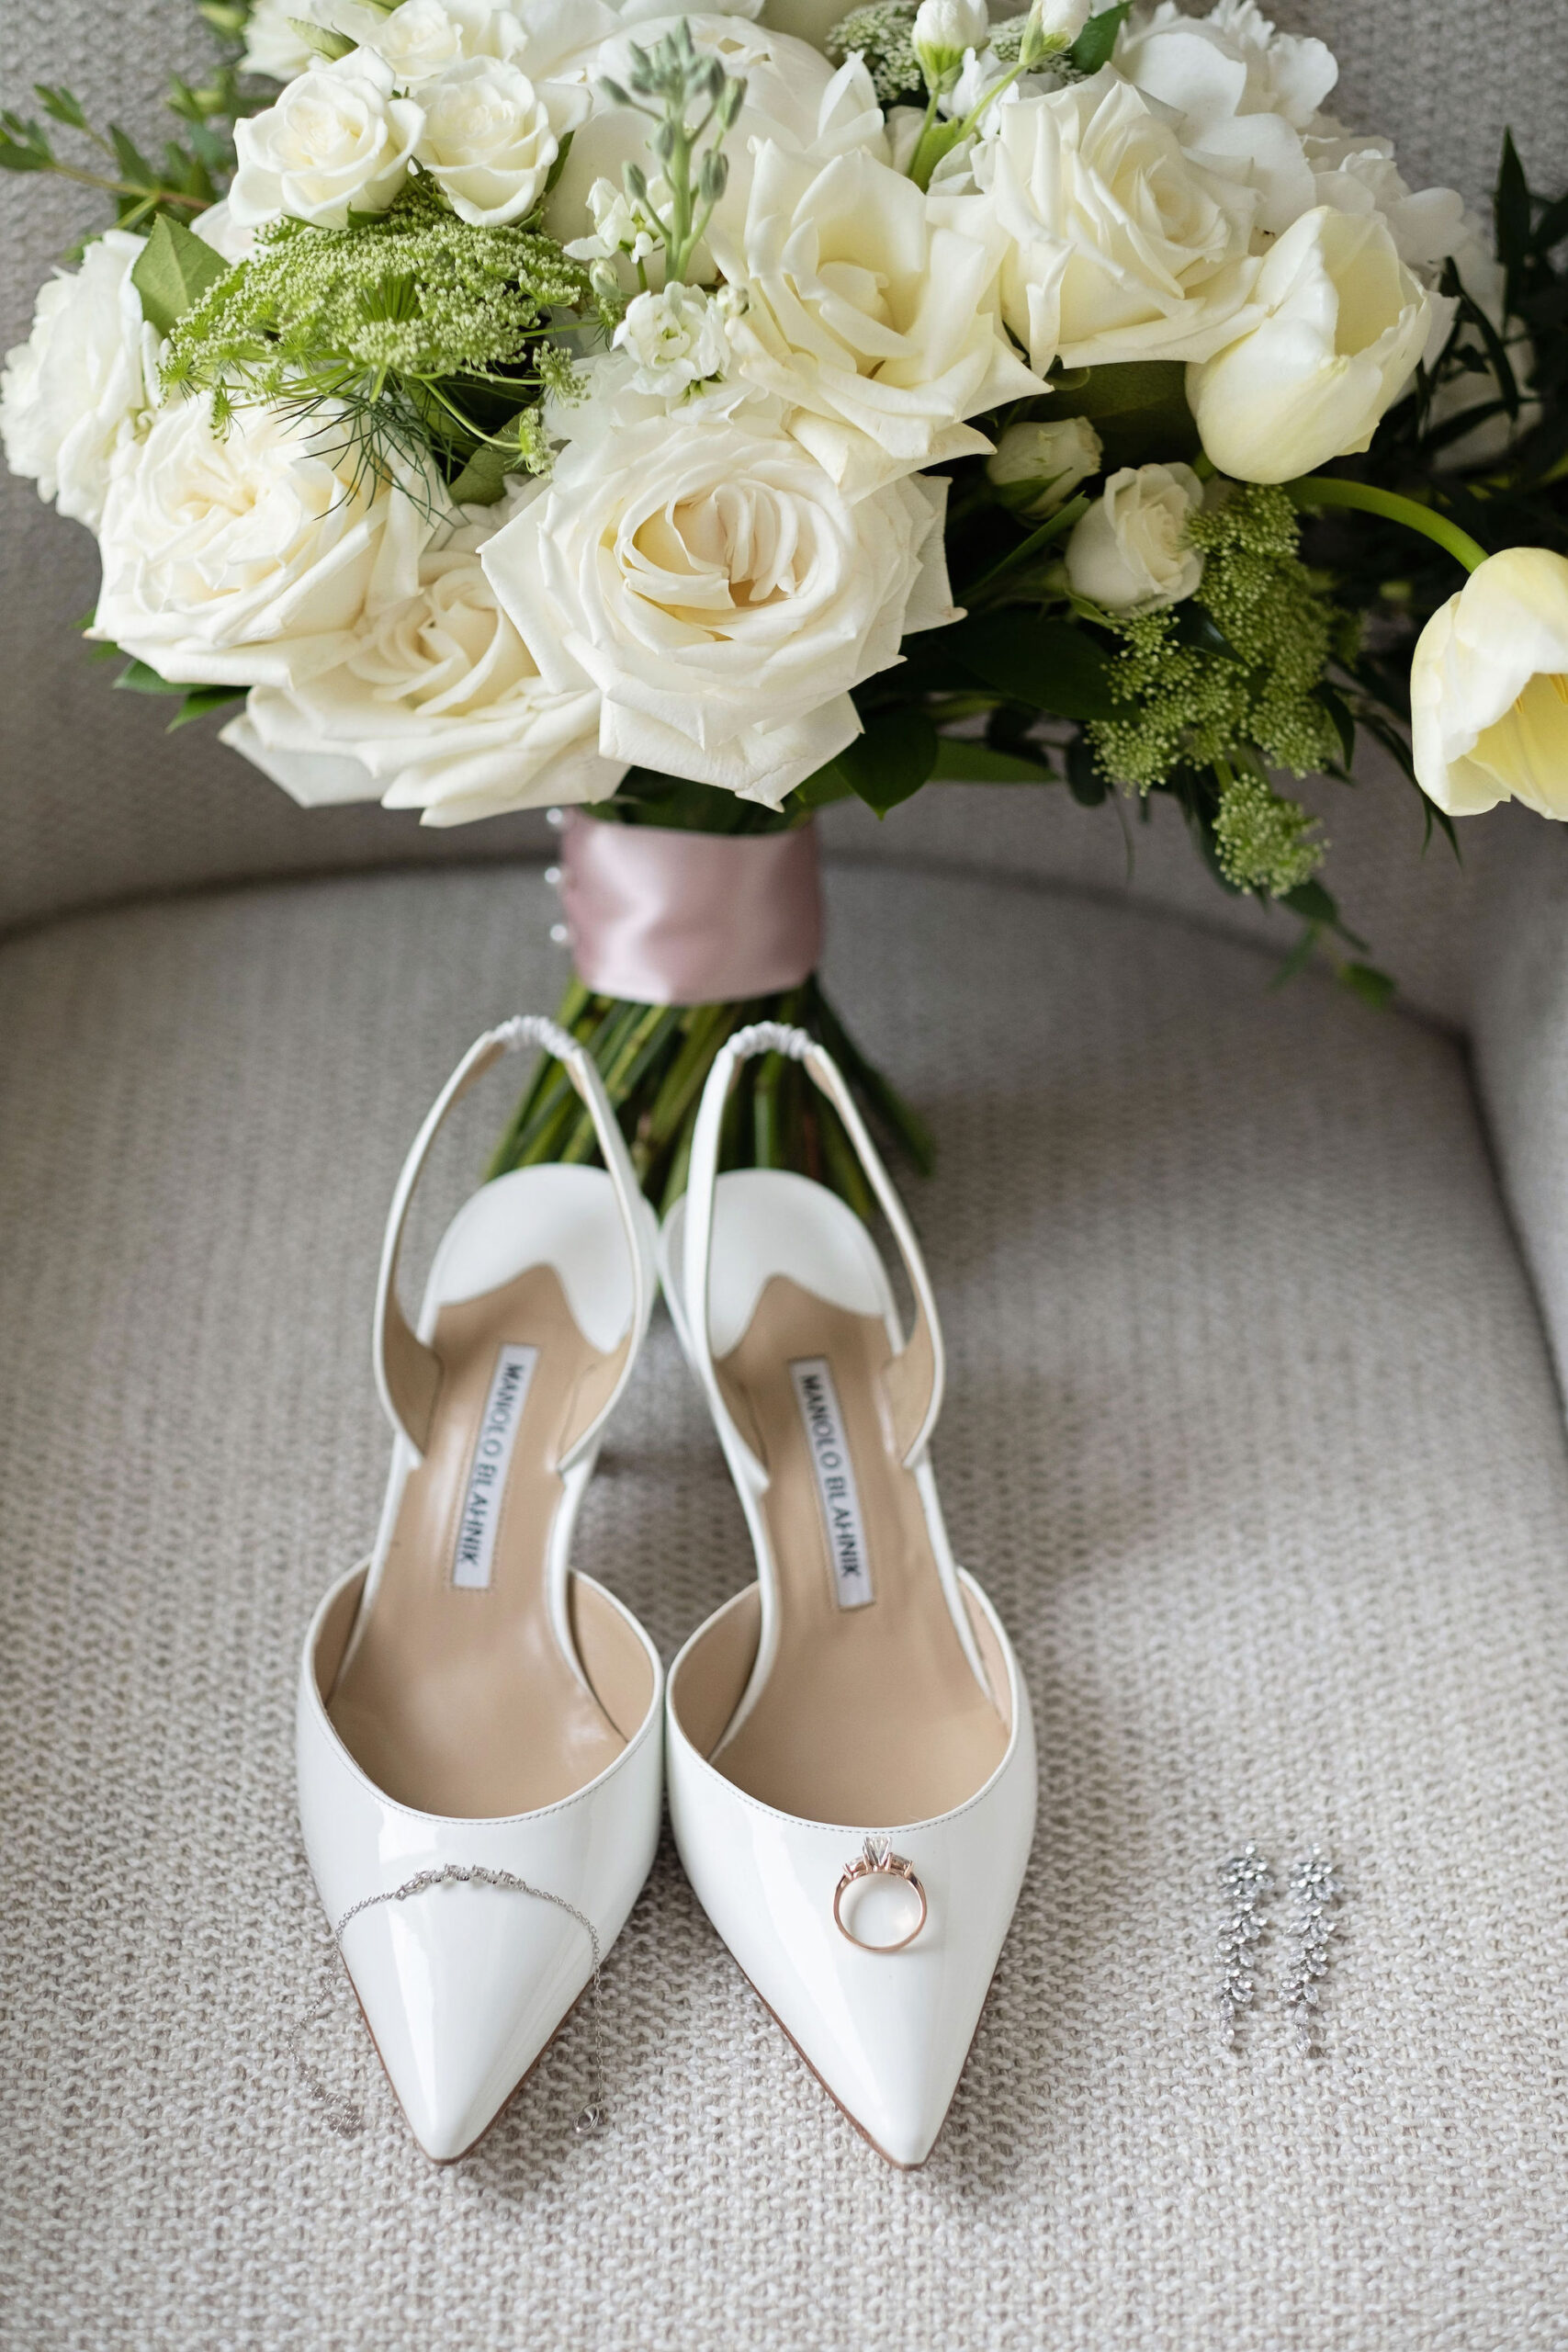 Classic, Timeless White Manolo Blahnik Pointed Toe Wedding Shoes Ideas